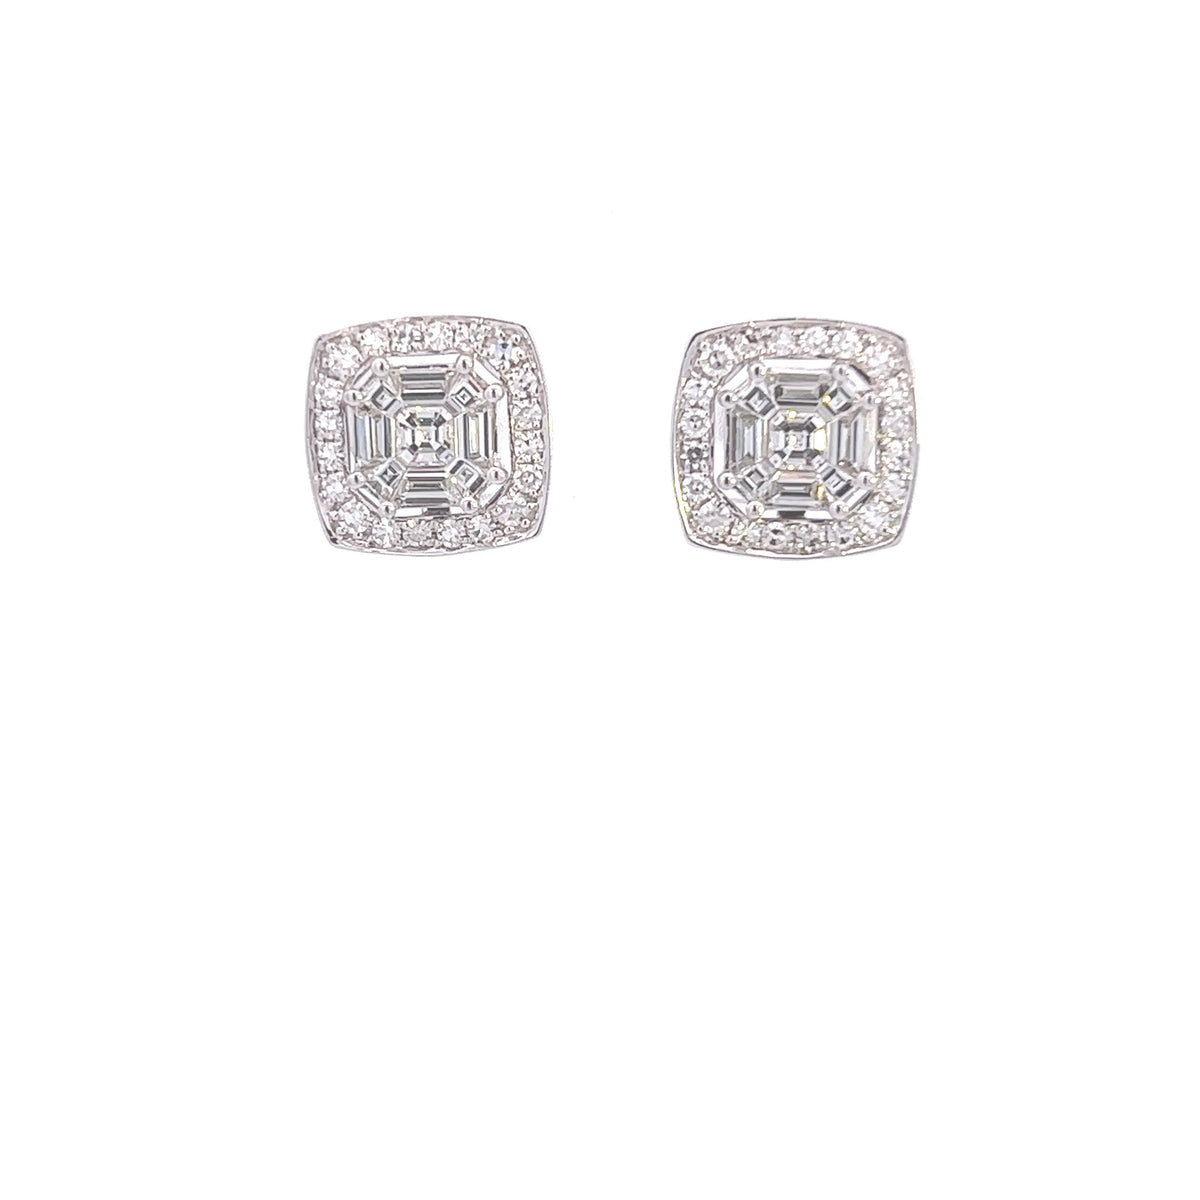 18K White Gold Diamond Studs with Emerald Cut Diamonds